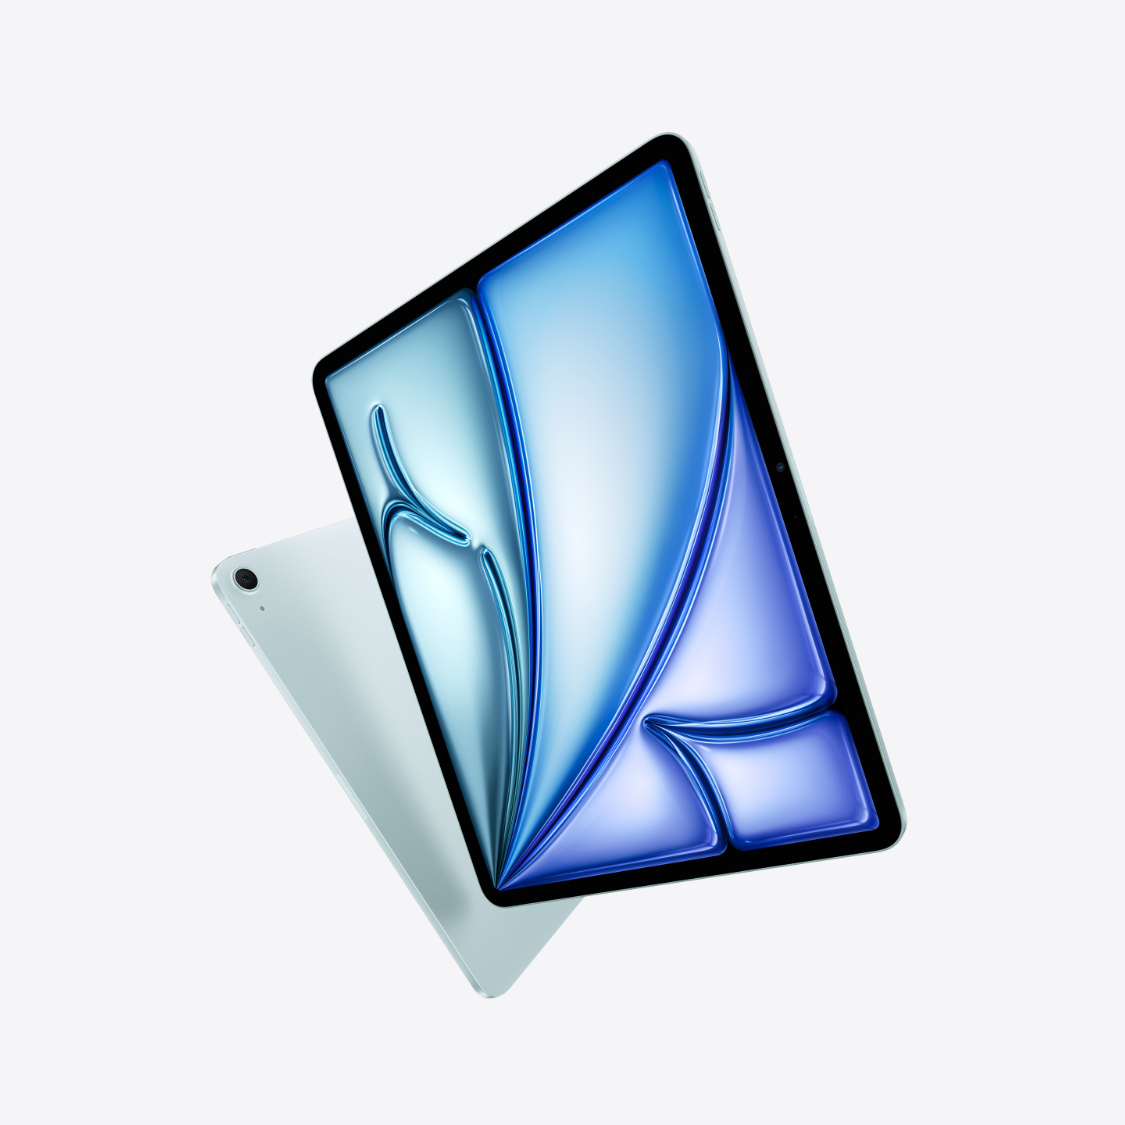 iPad Air 13-inch model in blue